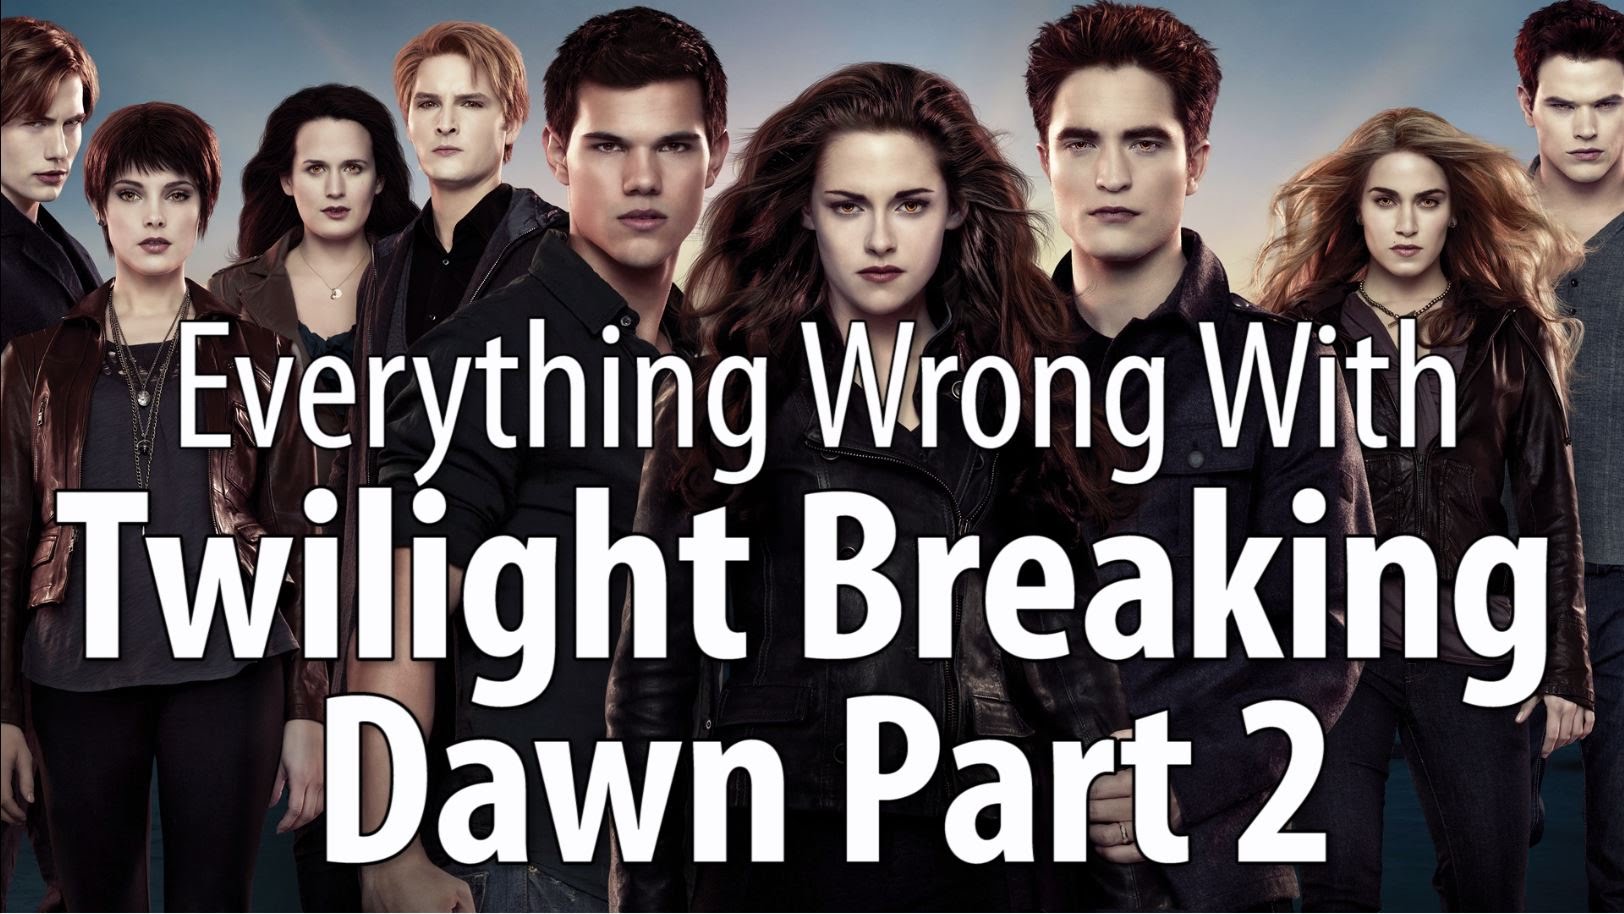 The Twilight Saga: Breaking Dawn - Part 2 #2